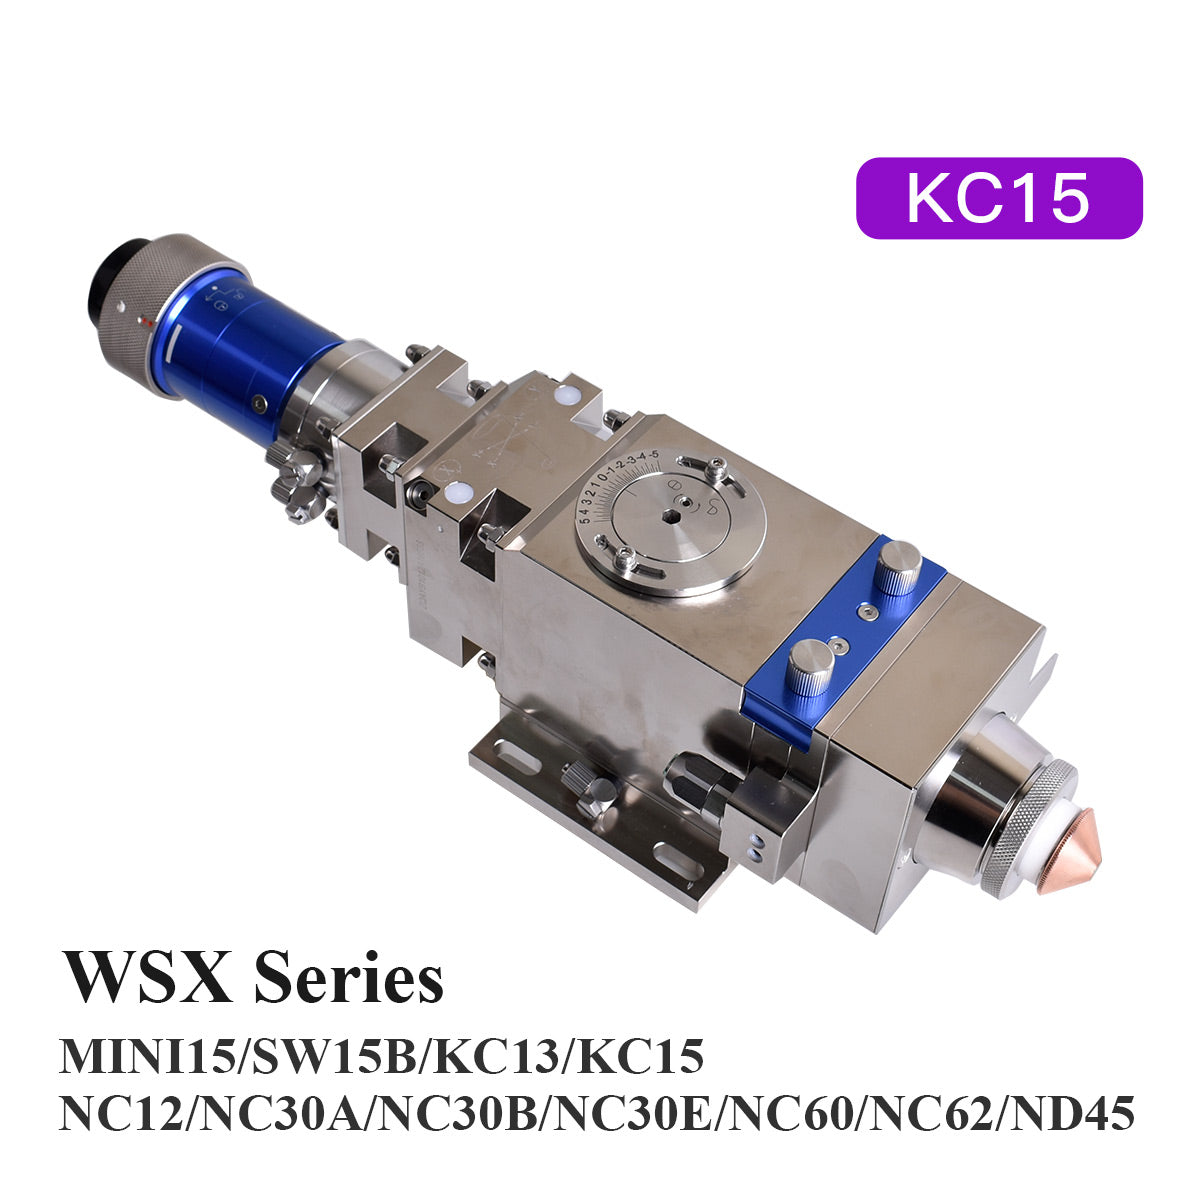 WSX Laser Cutting Head Manual & Automatic Focusing MINI15 KC13 NC30B NC62A